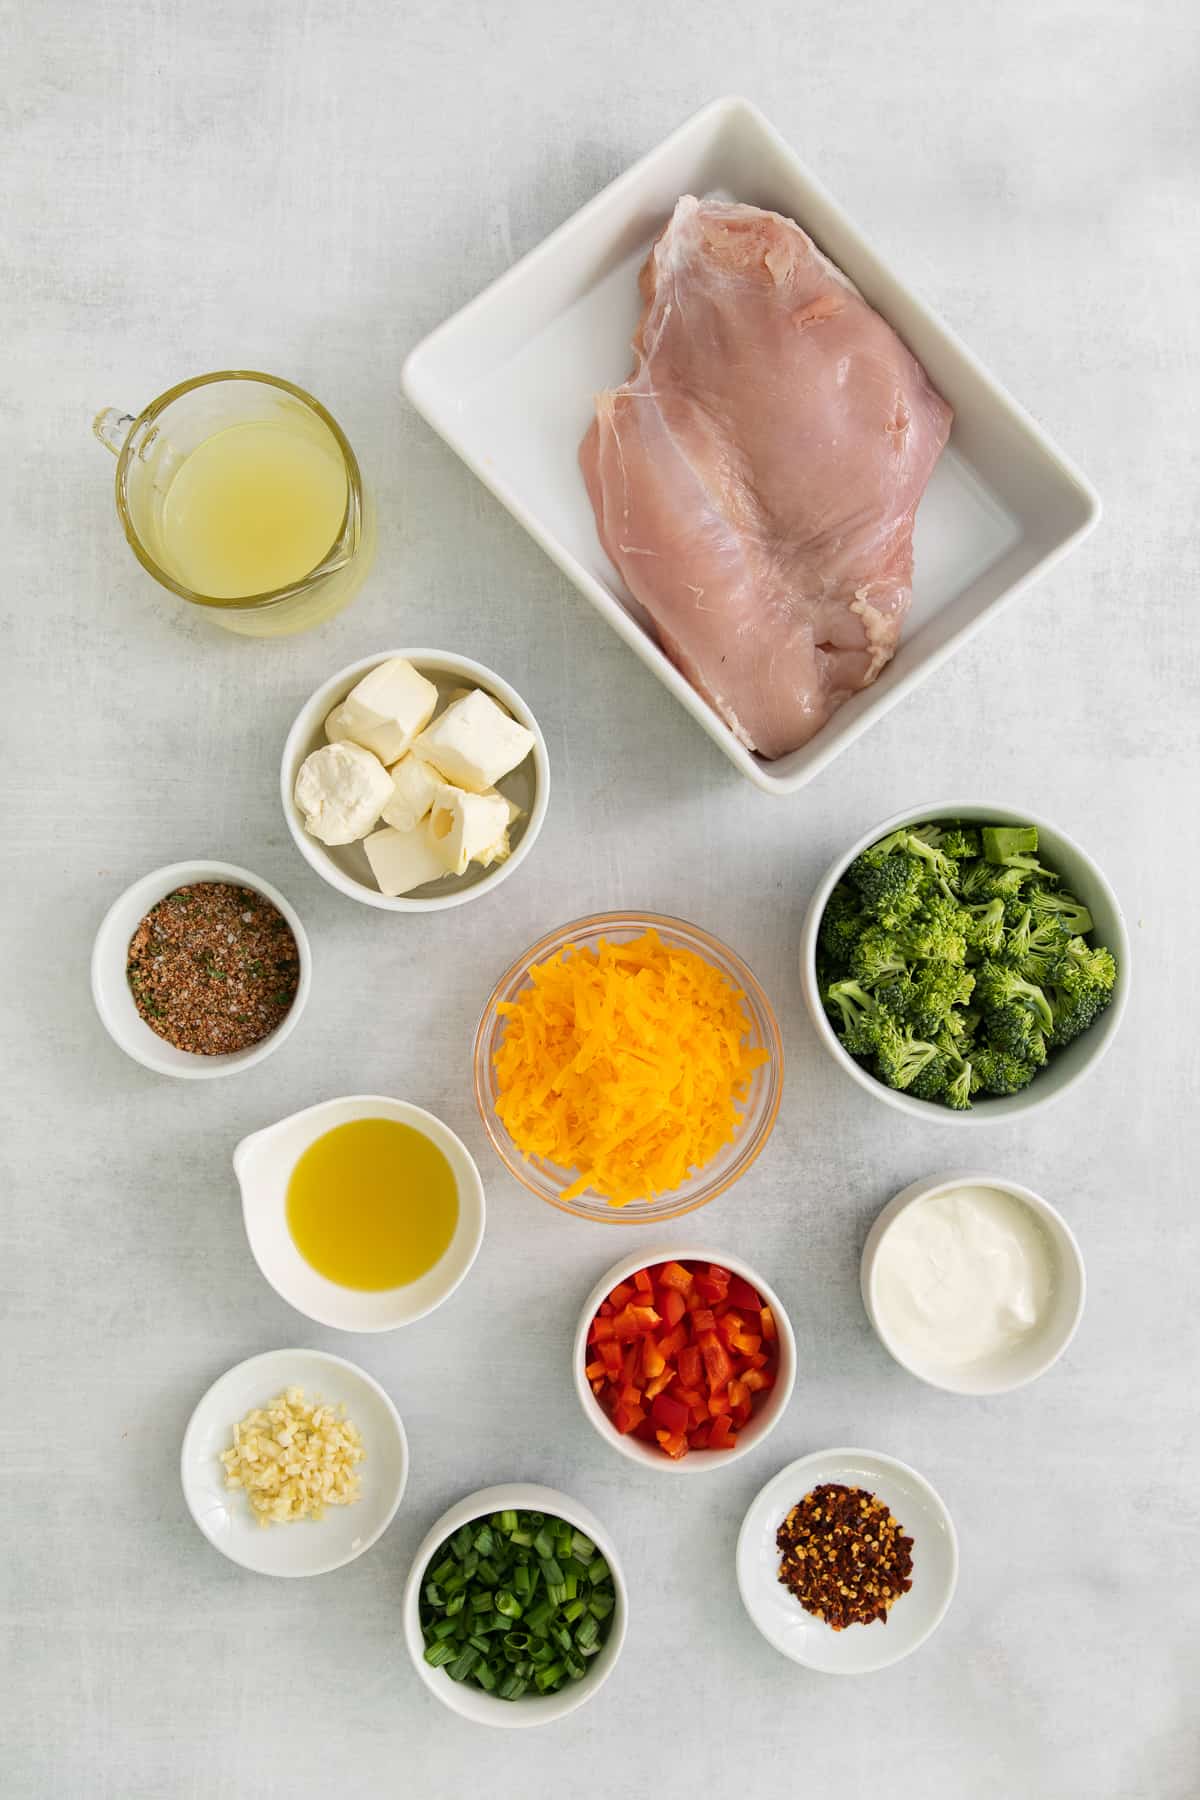 Ingredients for stuffed turkey breast in bowls.